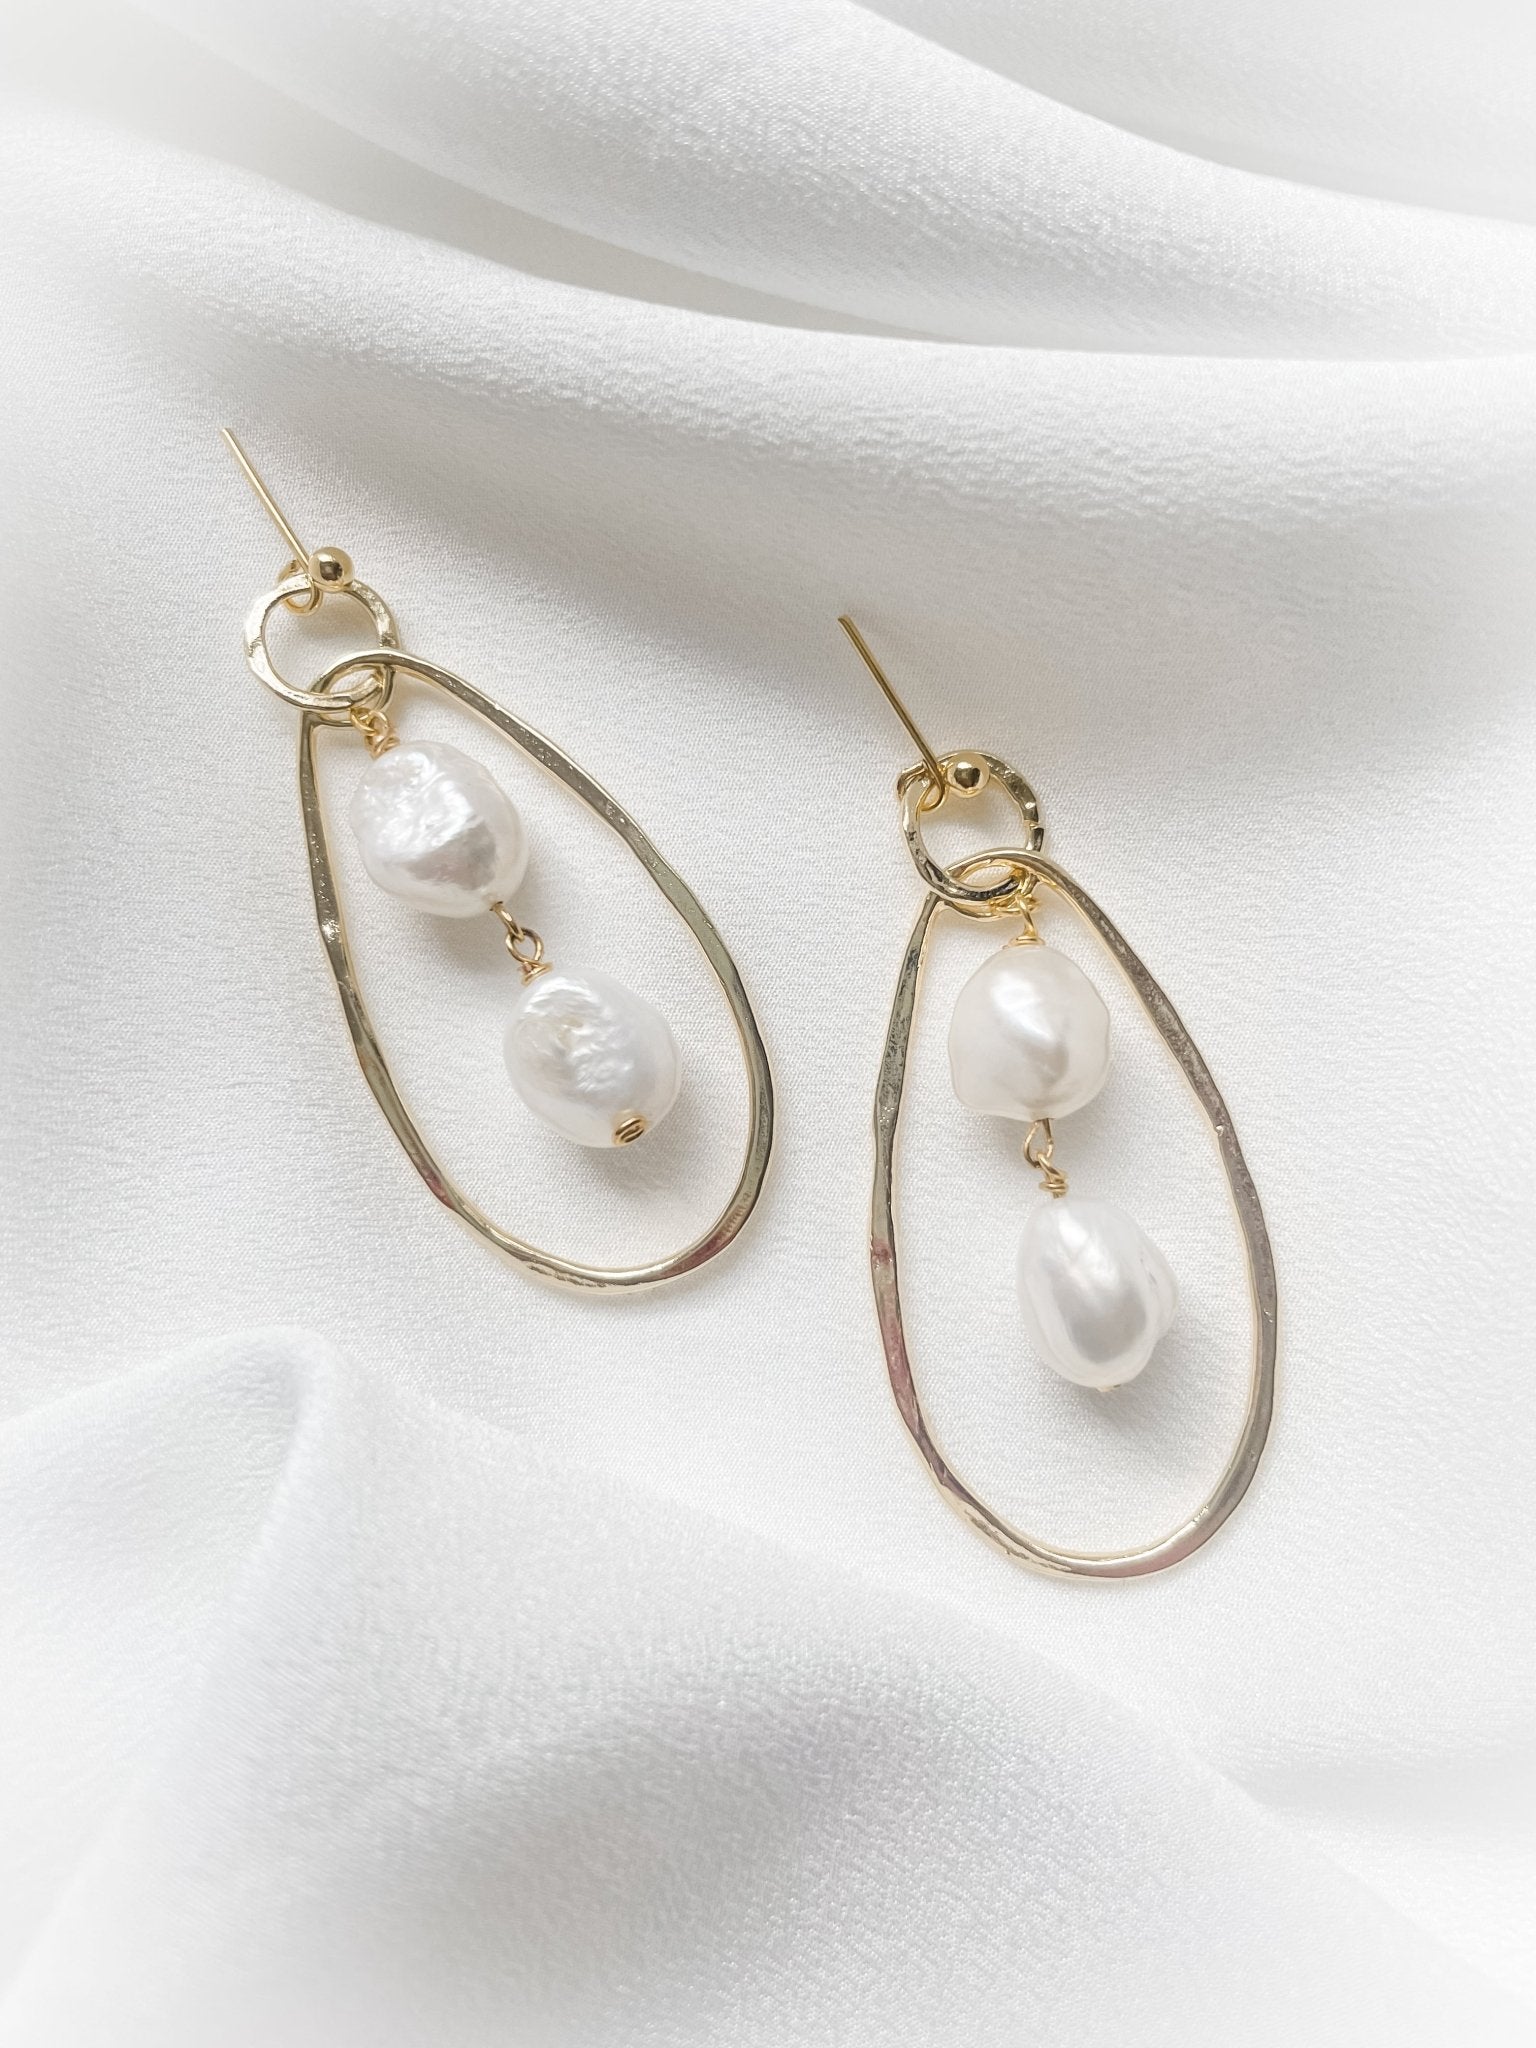 Edie gold statement baroque pearl sculptural earrings £95